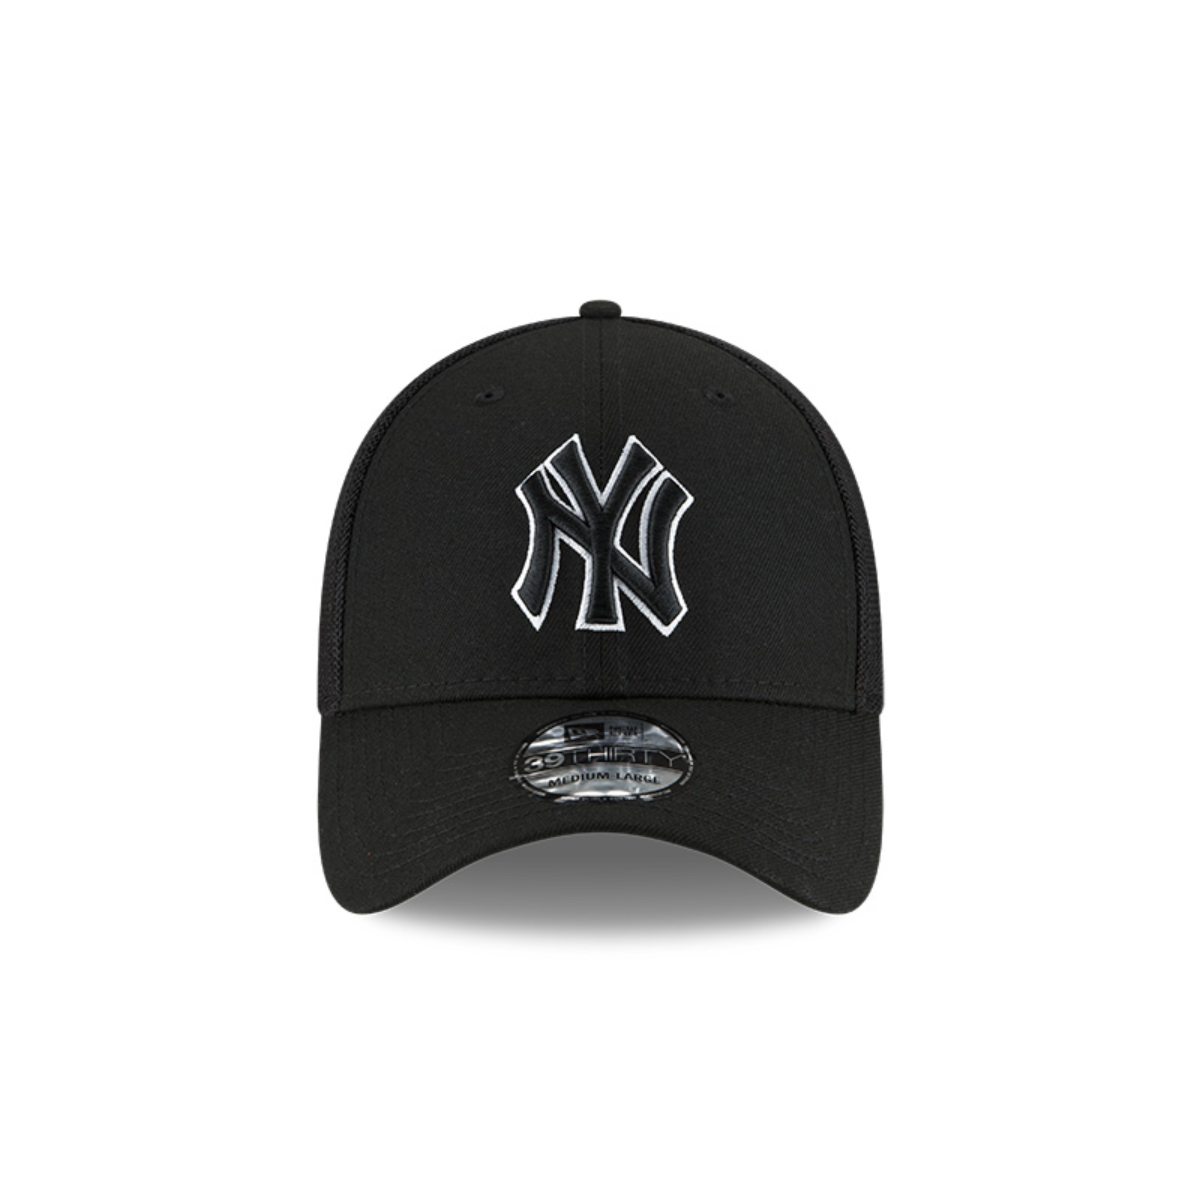 Gorra On Field Batting Practice 39Thirty Cerrada / New Era - New York Yankees